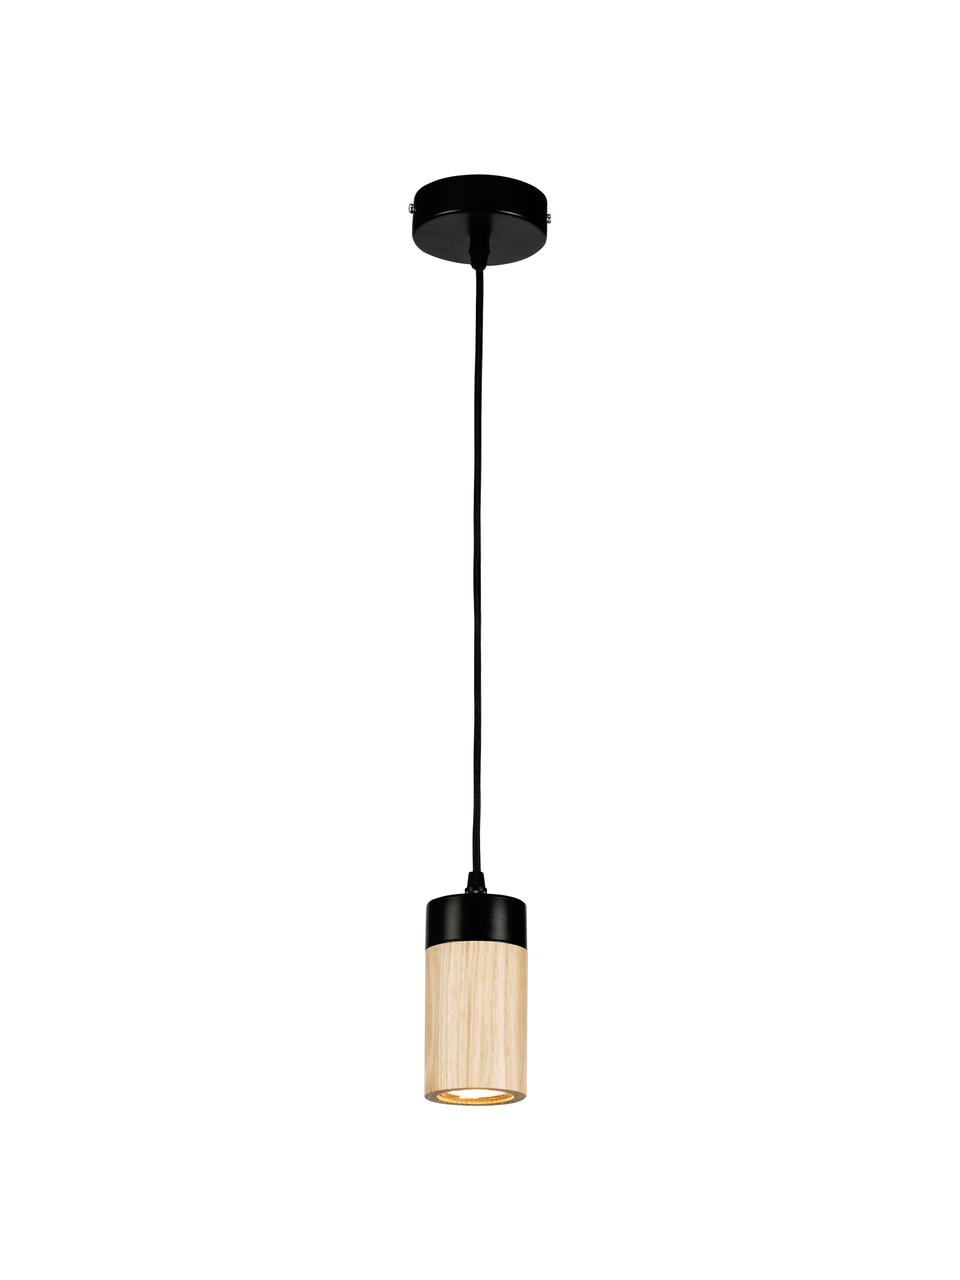 Malá závesná lampa z dreva Annick, Čierna, béžová